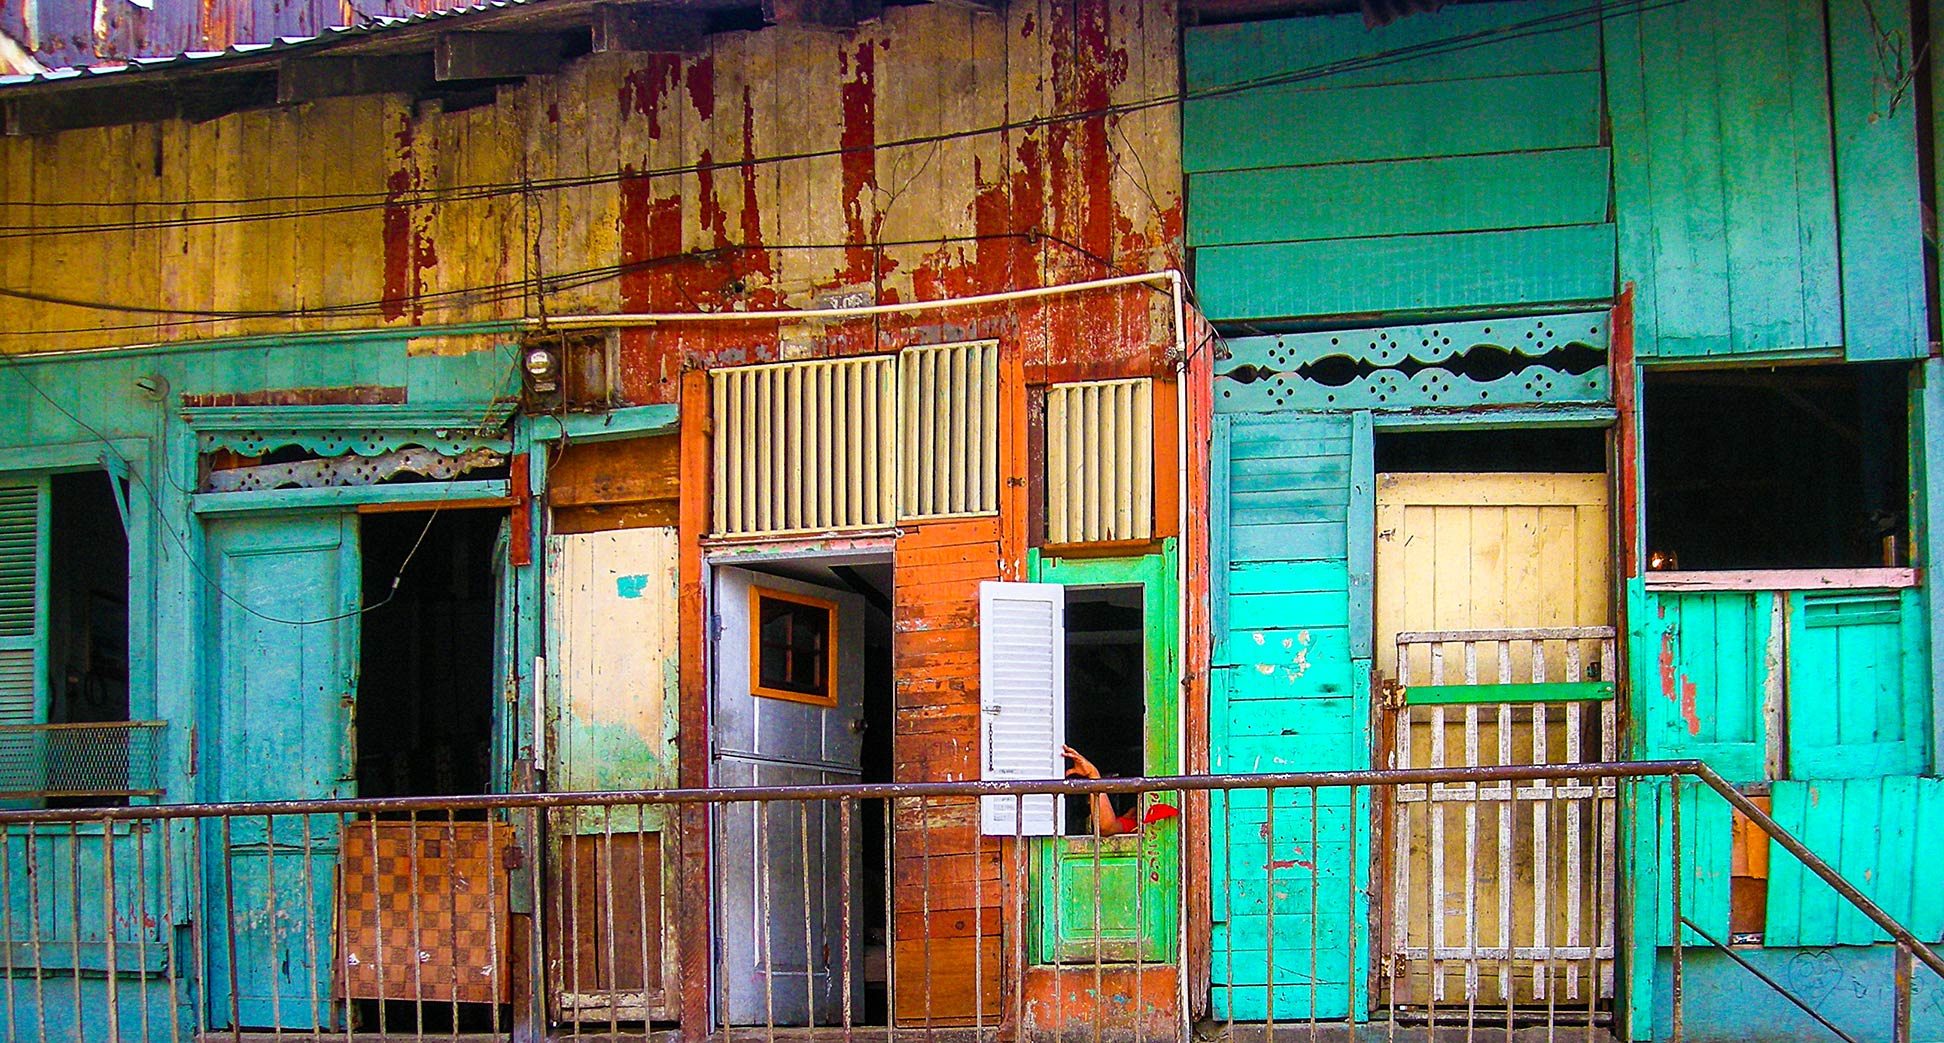 Substandard housing in an alleyway in Panama City, Panama.